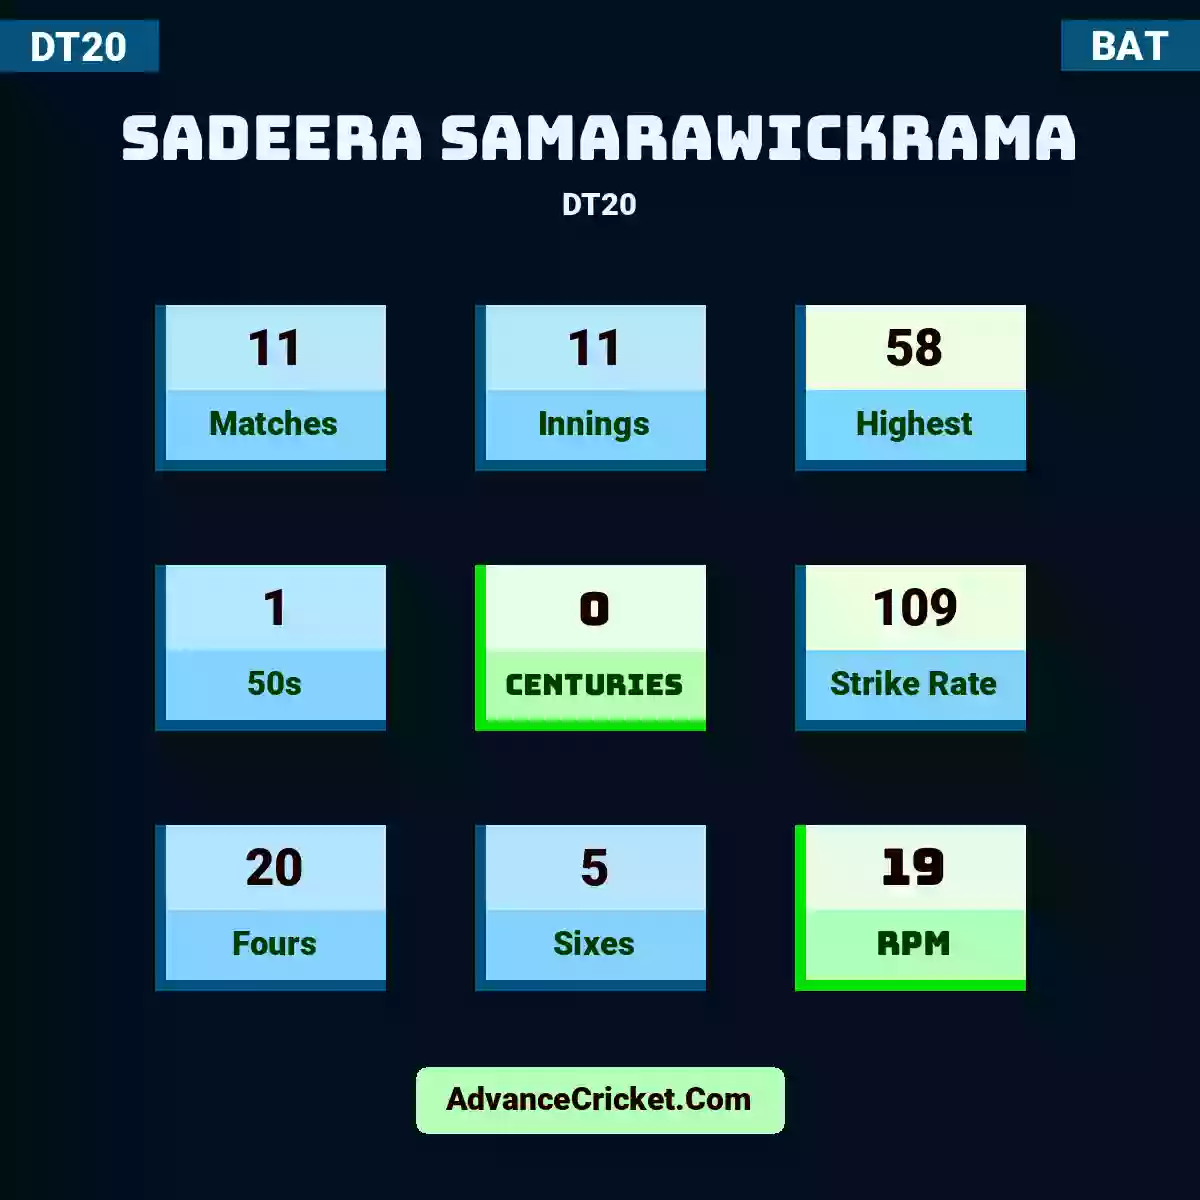 Sadeera Samarawickrama DT20 , Sadeera Samarawickrama played 11 matches, scored 58 runs as highest, 1 half-centuries, and 0 centuries, with a strike rate of 109. S.Samarawickrama hit 20 fours and 5 sixes, with an RPM of 19.